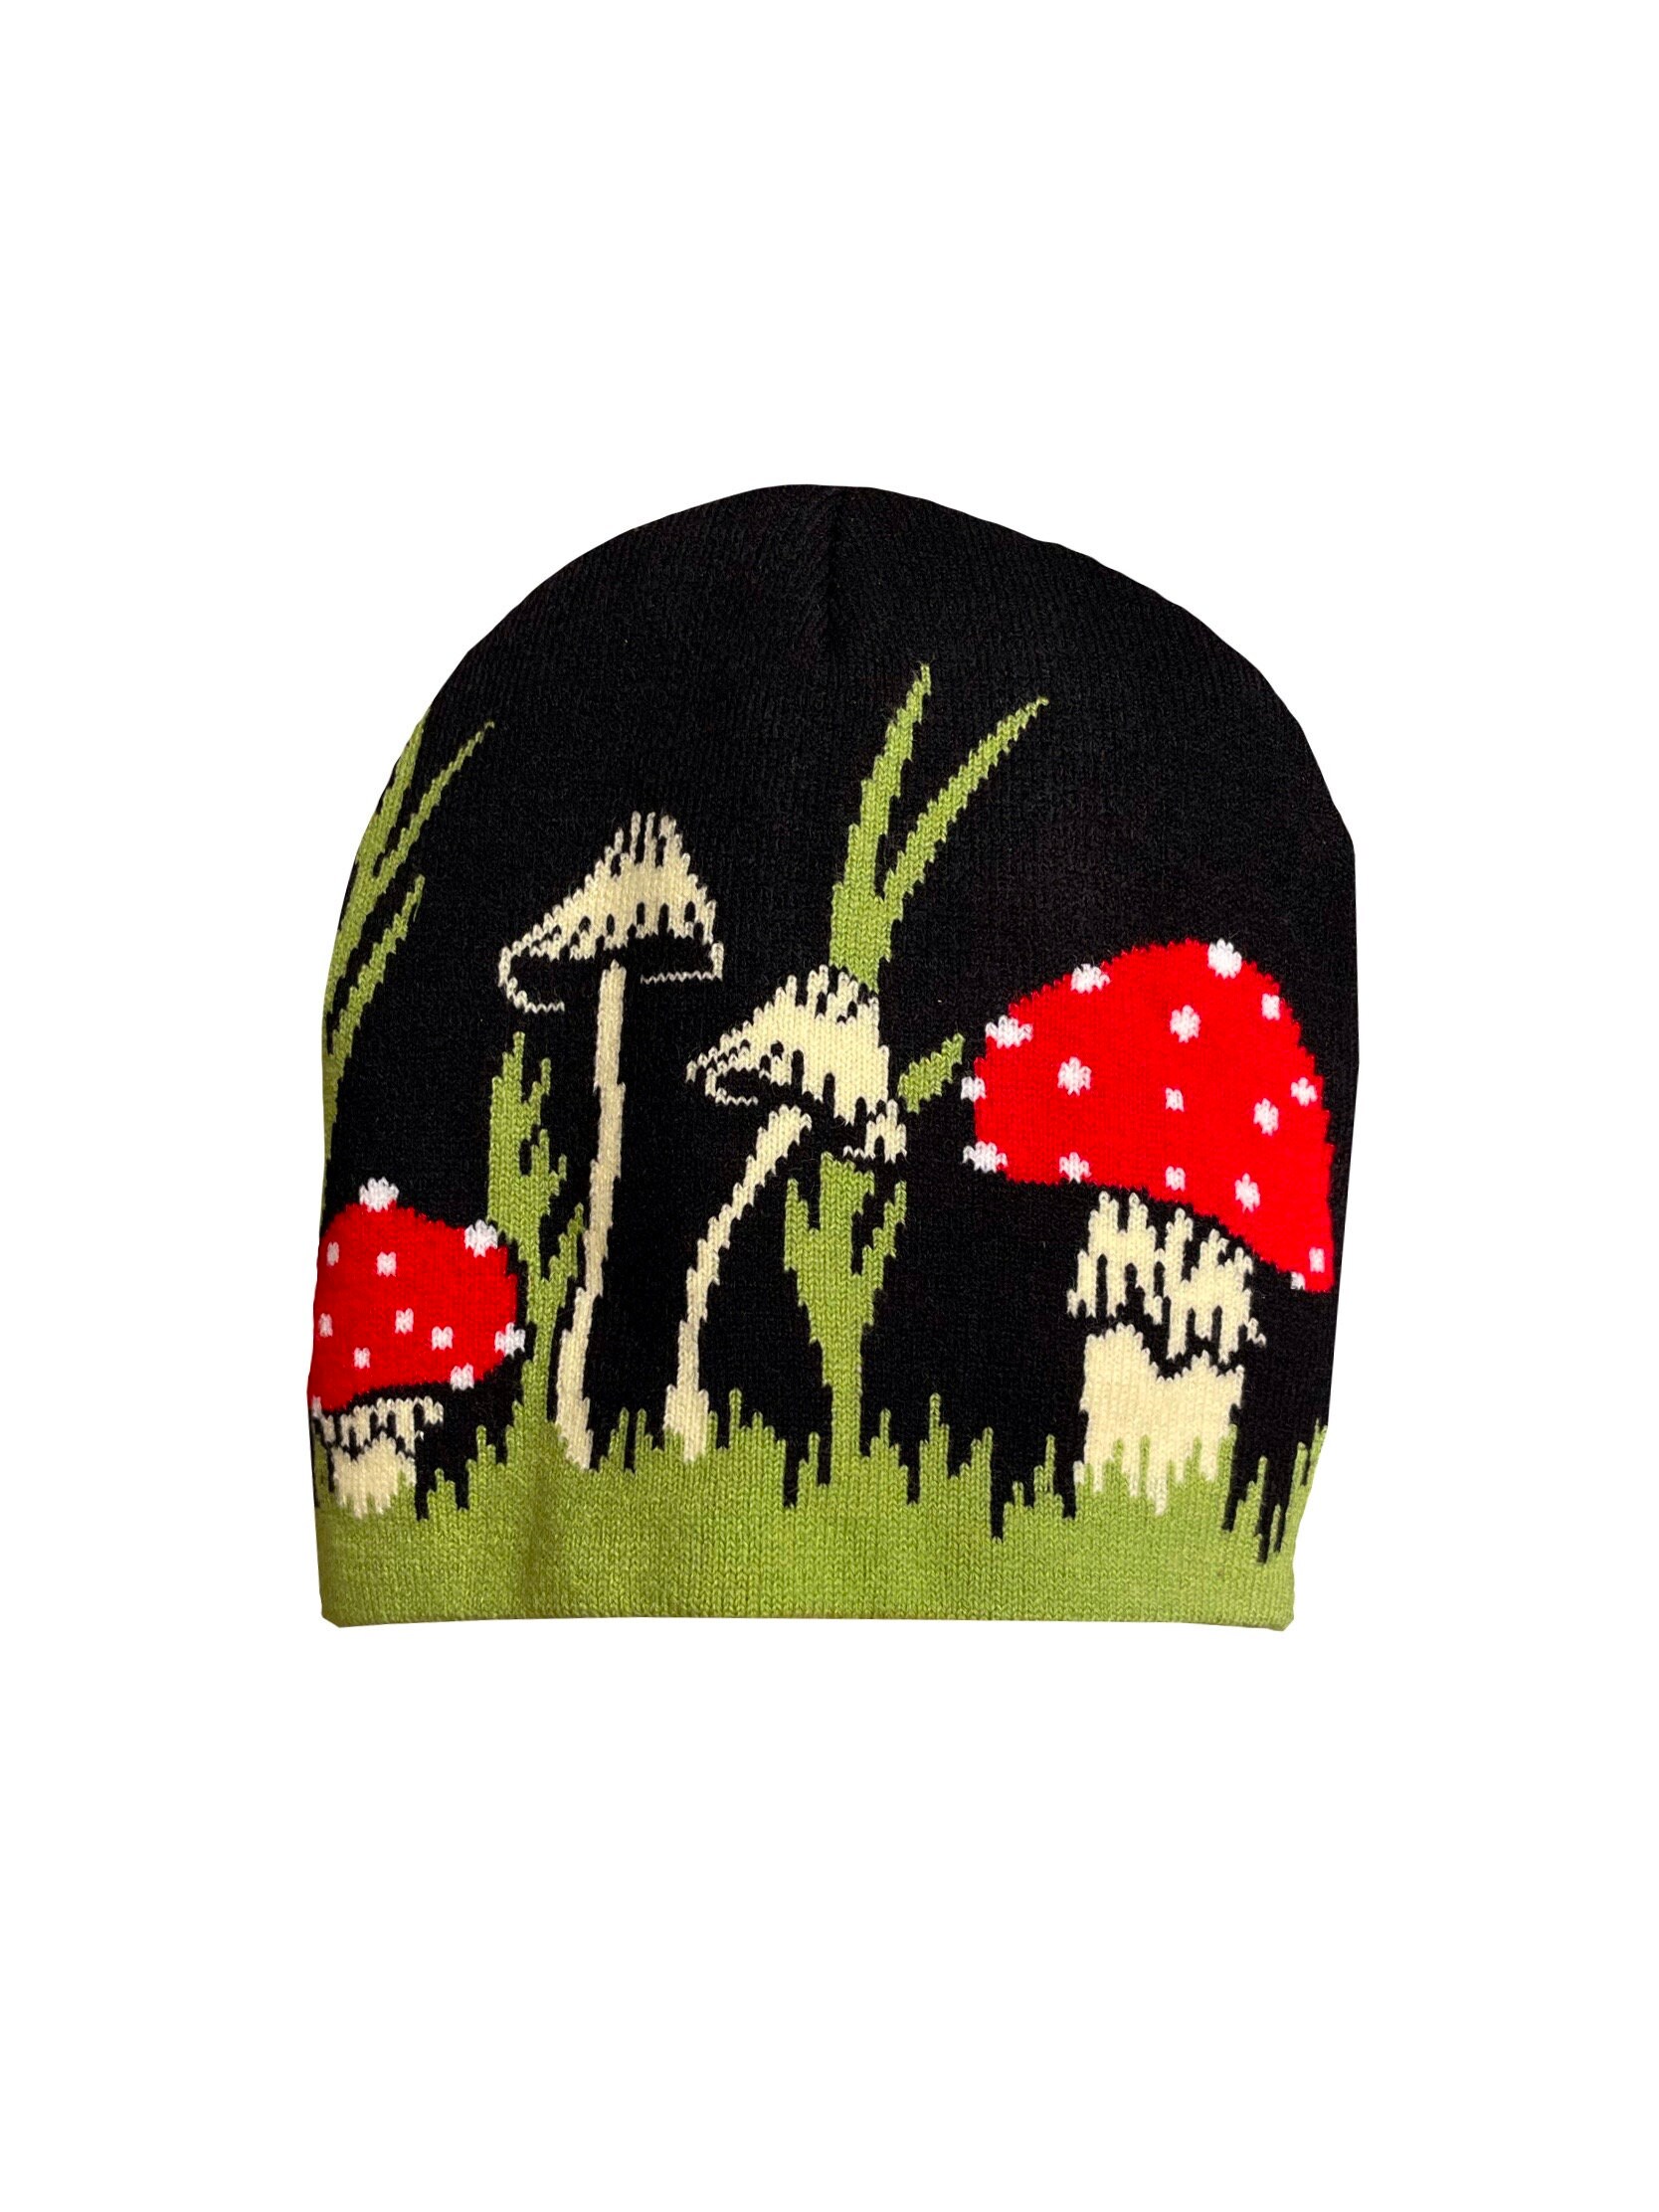 Magical Mushrooms Beanies Knit Hat Magic Mushrooms Champignons Forest  Outdoors Cabin Nature Food Old Retro Mushroom Mask - AliExpress